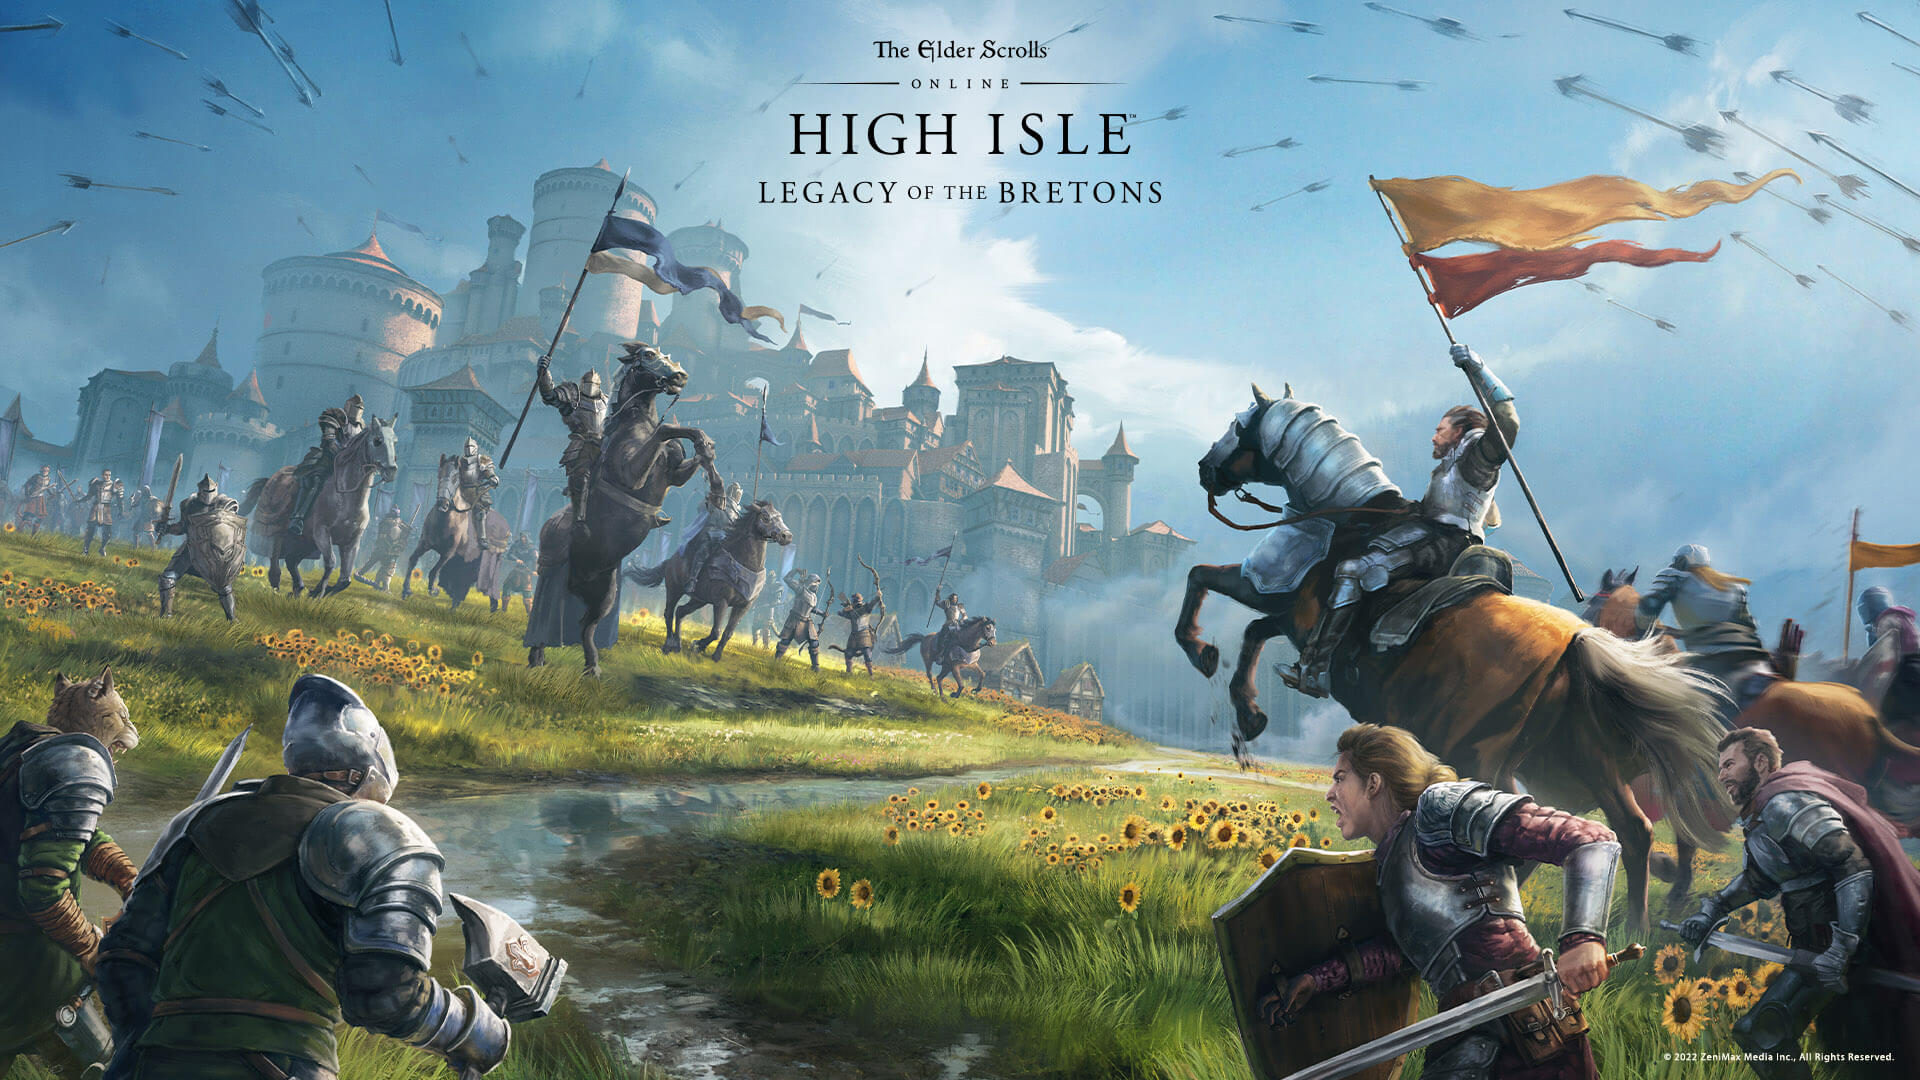 The Elder Scrolls Online Update 2.32 Deployed for High Isle DLC (June 20)